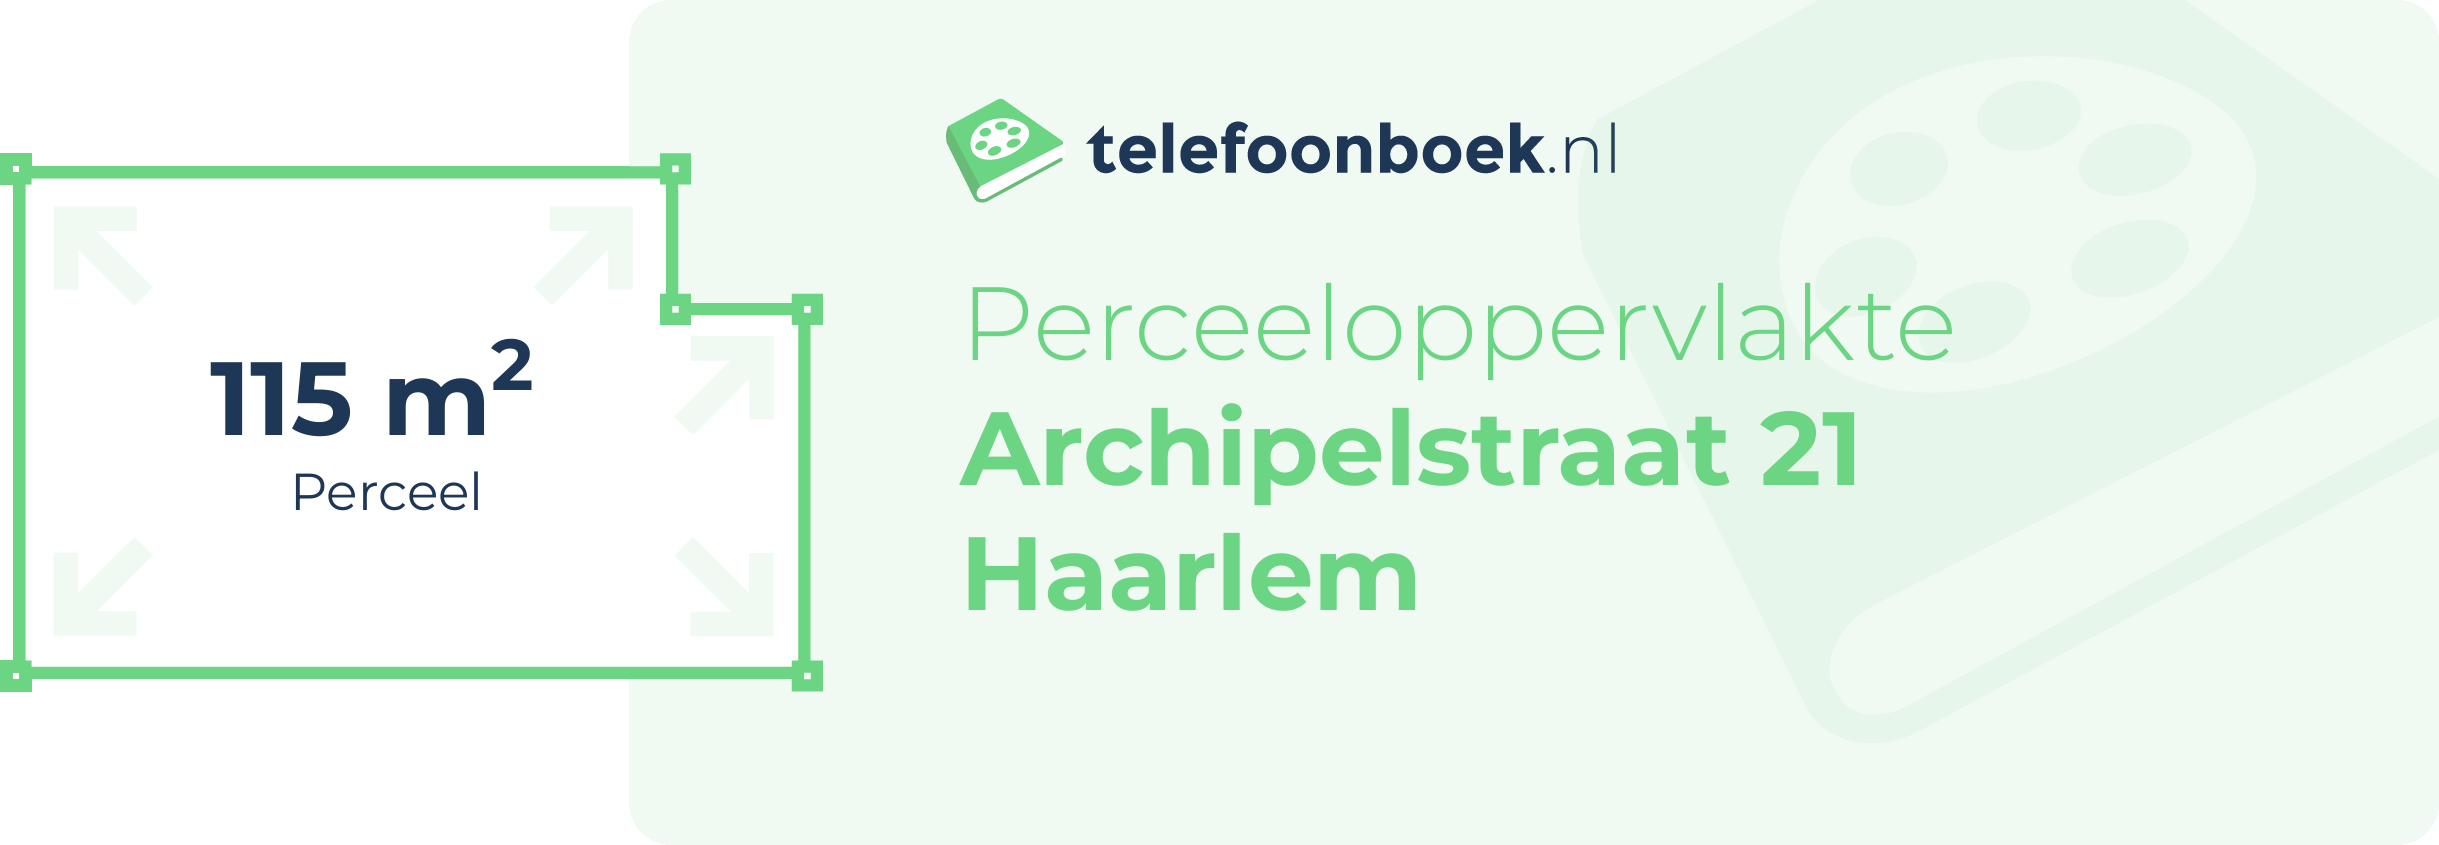 Perceeloppervlakte Archipelstraat 21 Haarlem